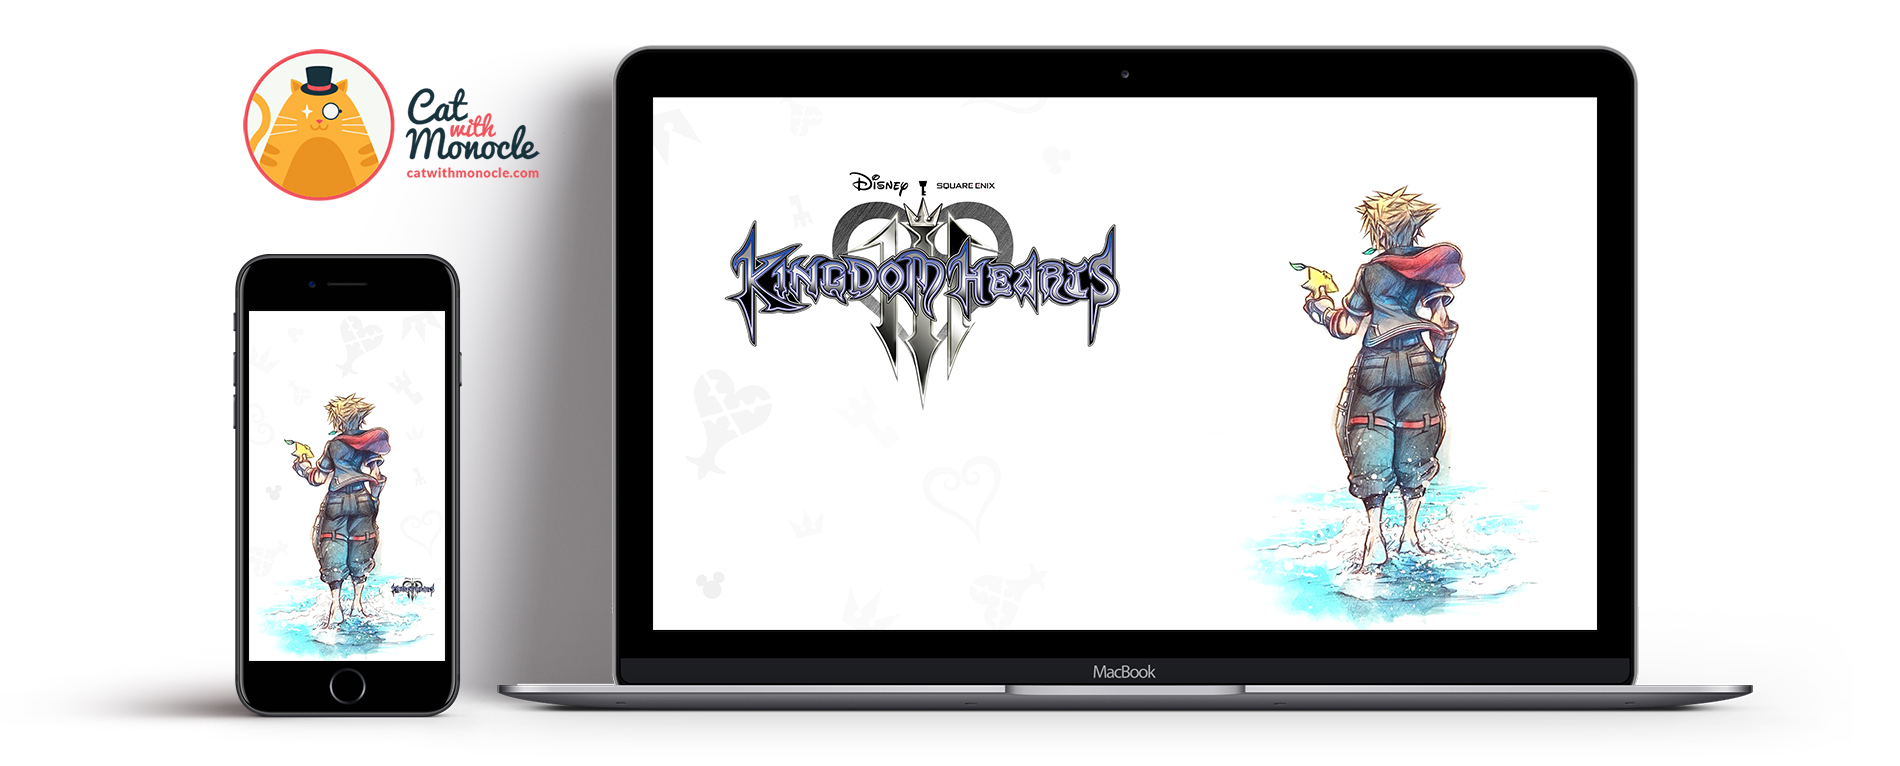 Kingdom Hearts Iii Menu Wallpaper - Super Smash Bros Ultimate Banjo - HD Wallpaper 